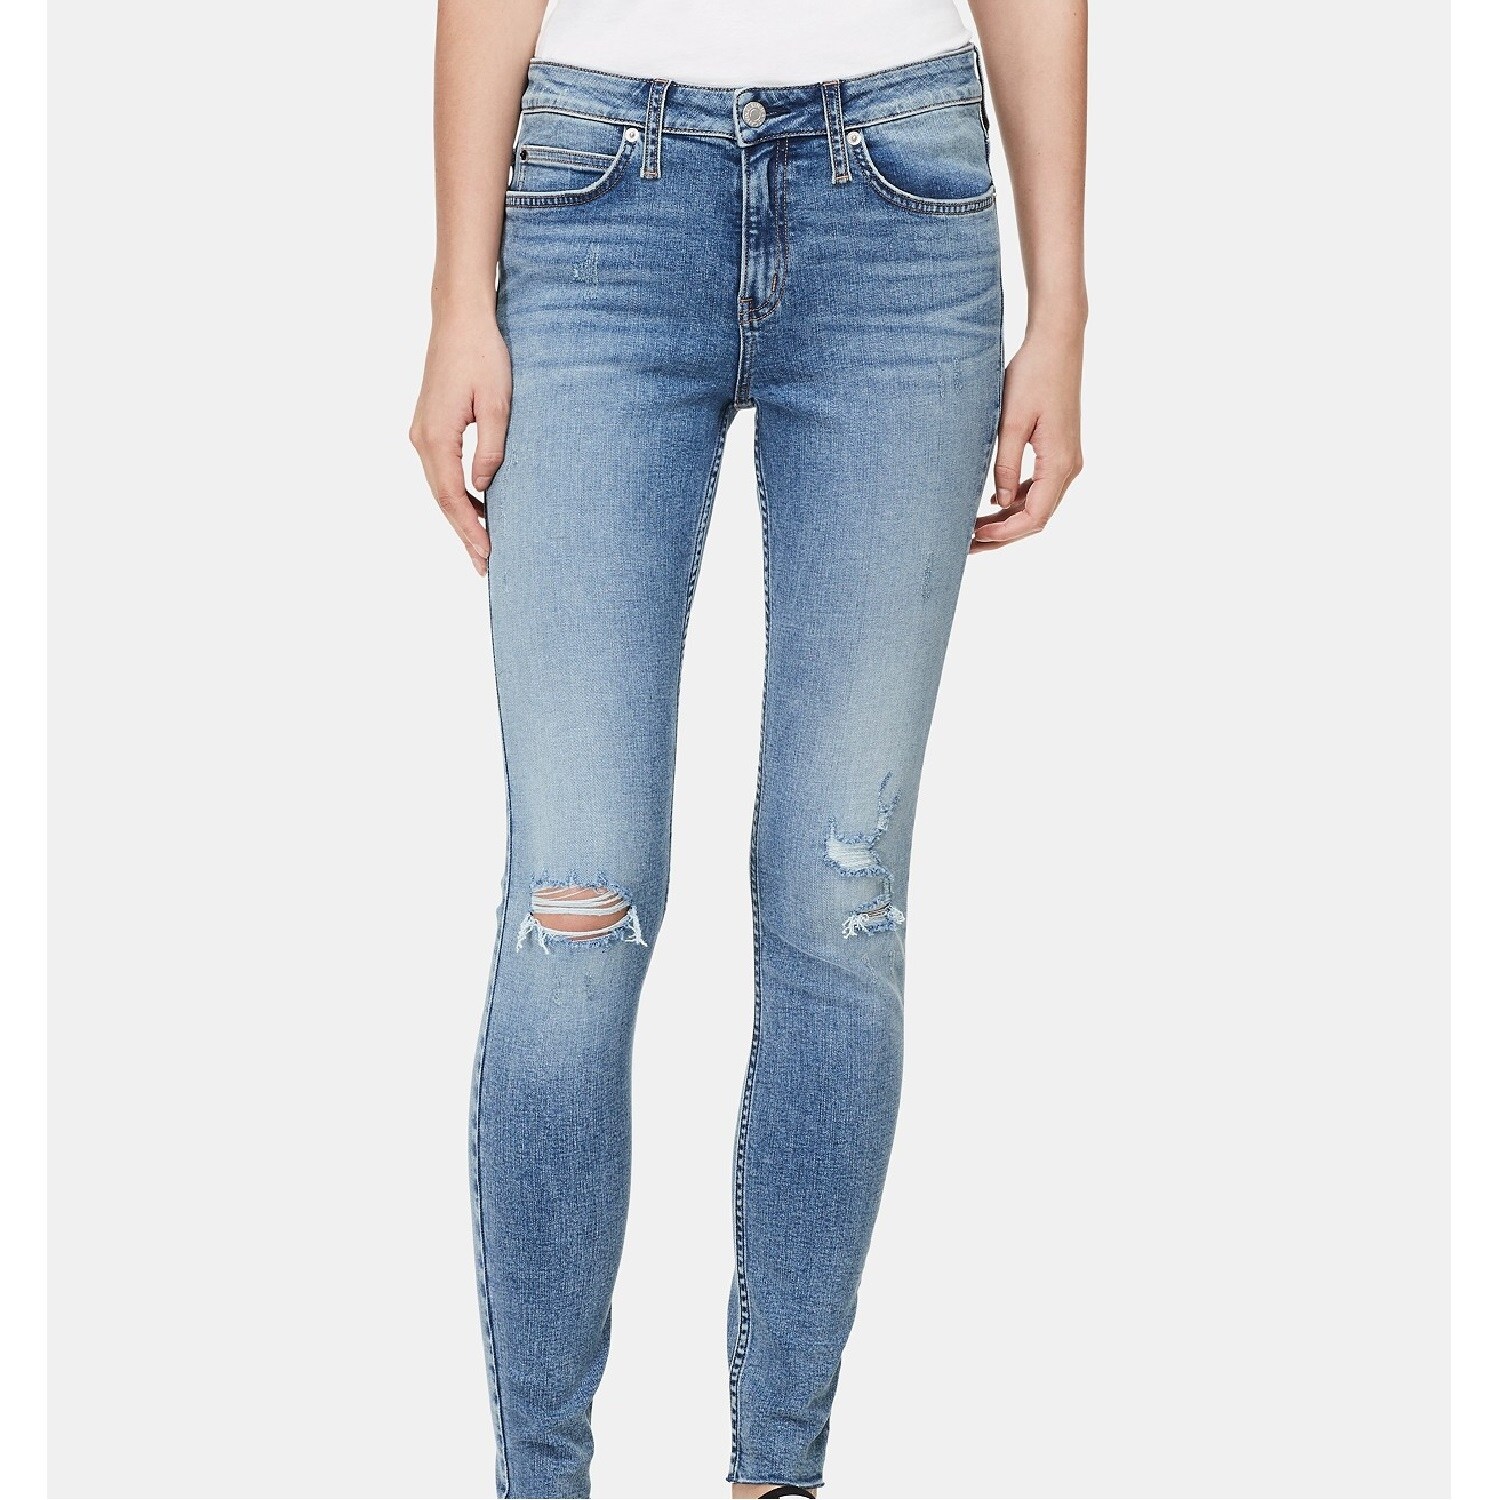 size 26 jeans